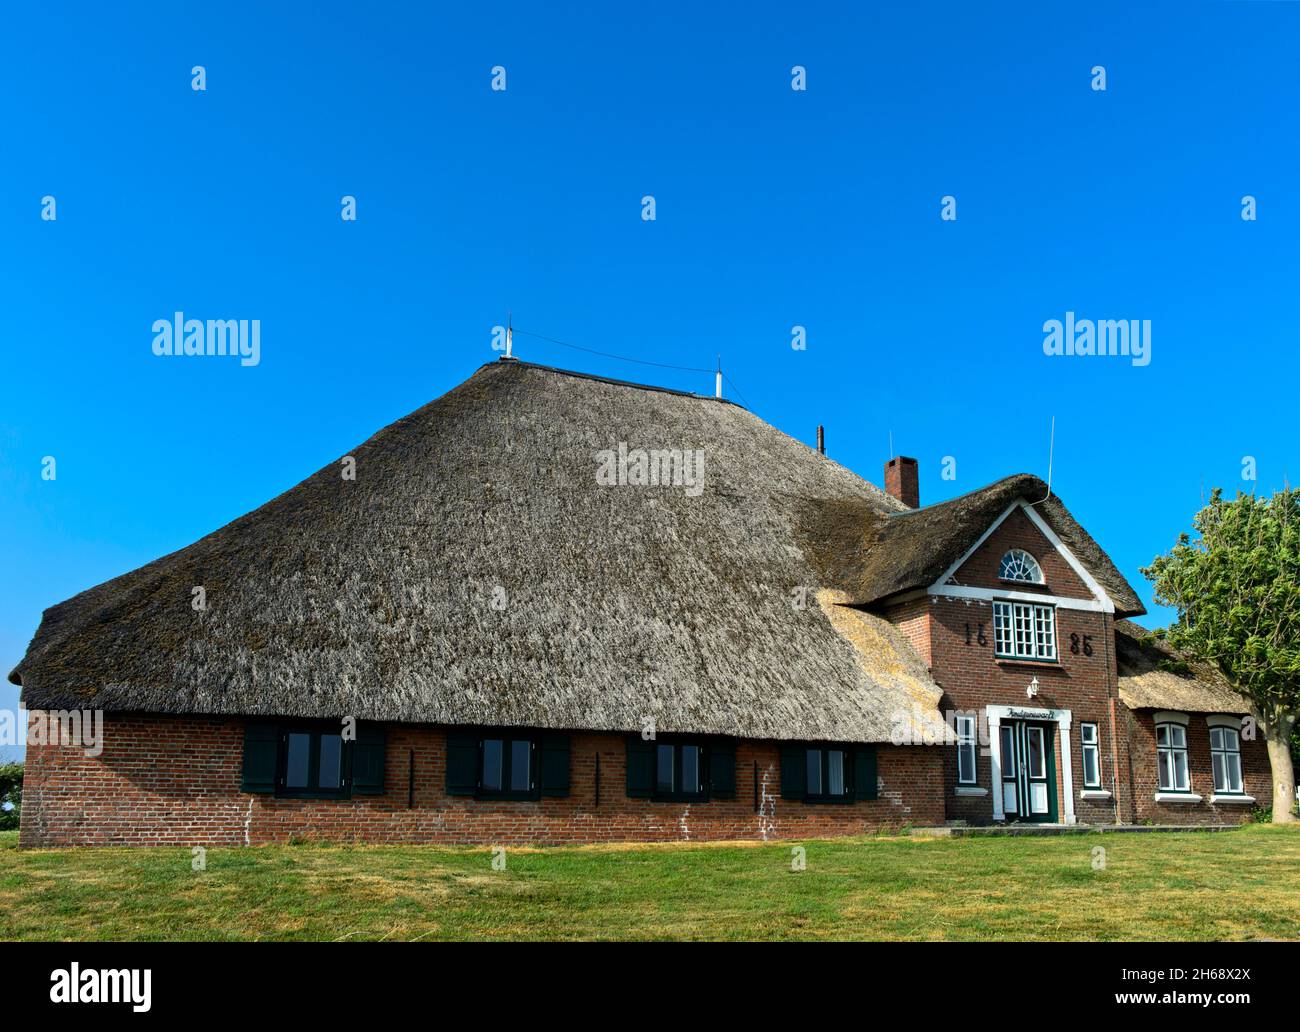 Traditional farmhouse type Haubarg, Haubarg Knutzenswarft, Westerhever, Eiderstedt peninsula, Schleswig-Holstein, Germany Stock Photo